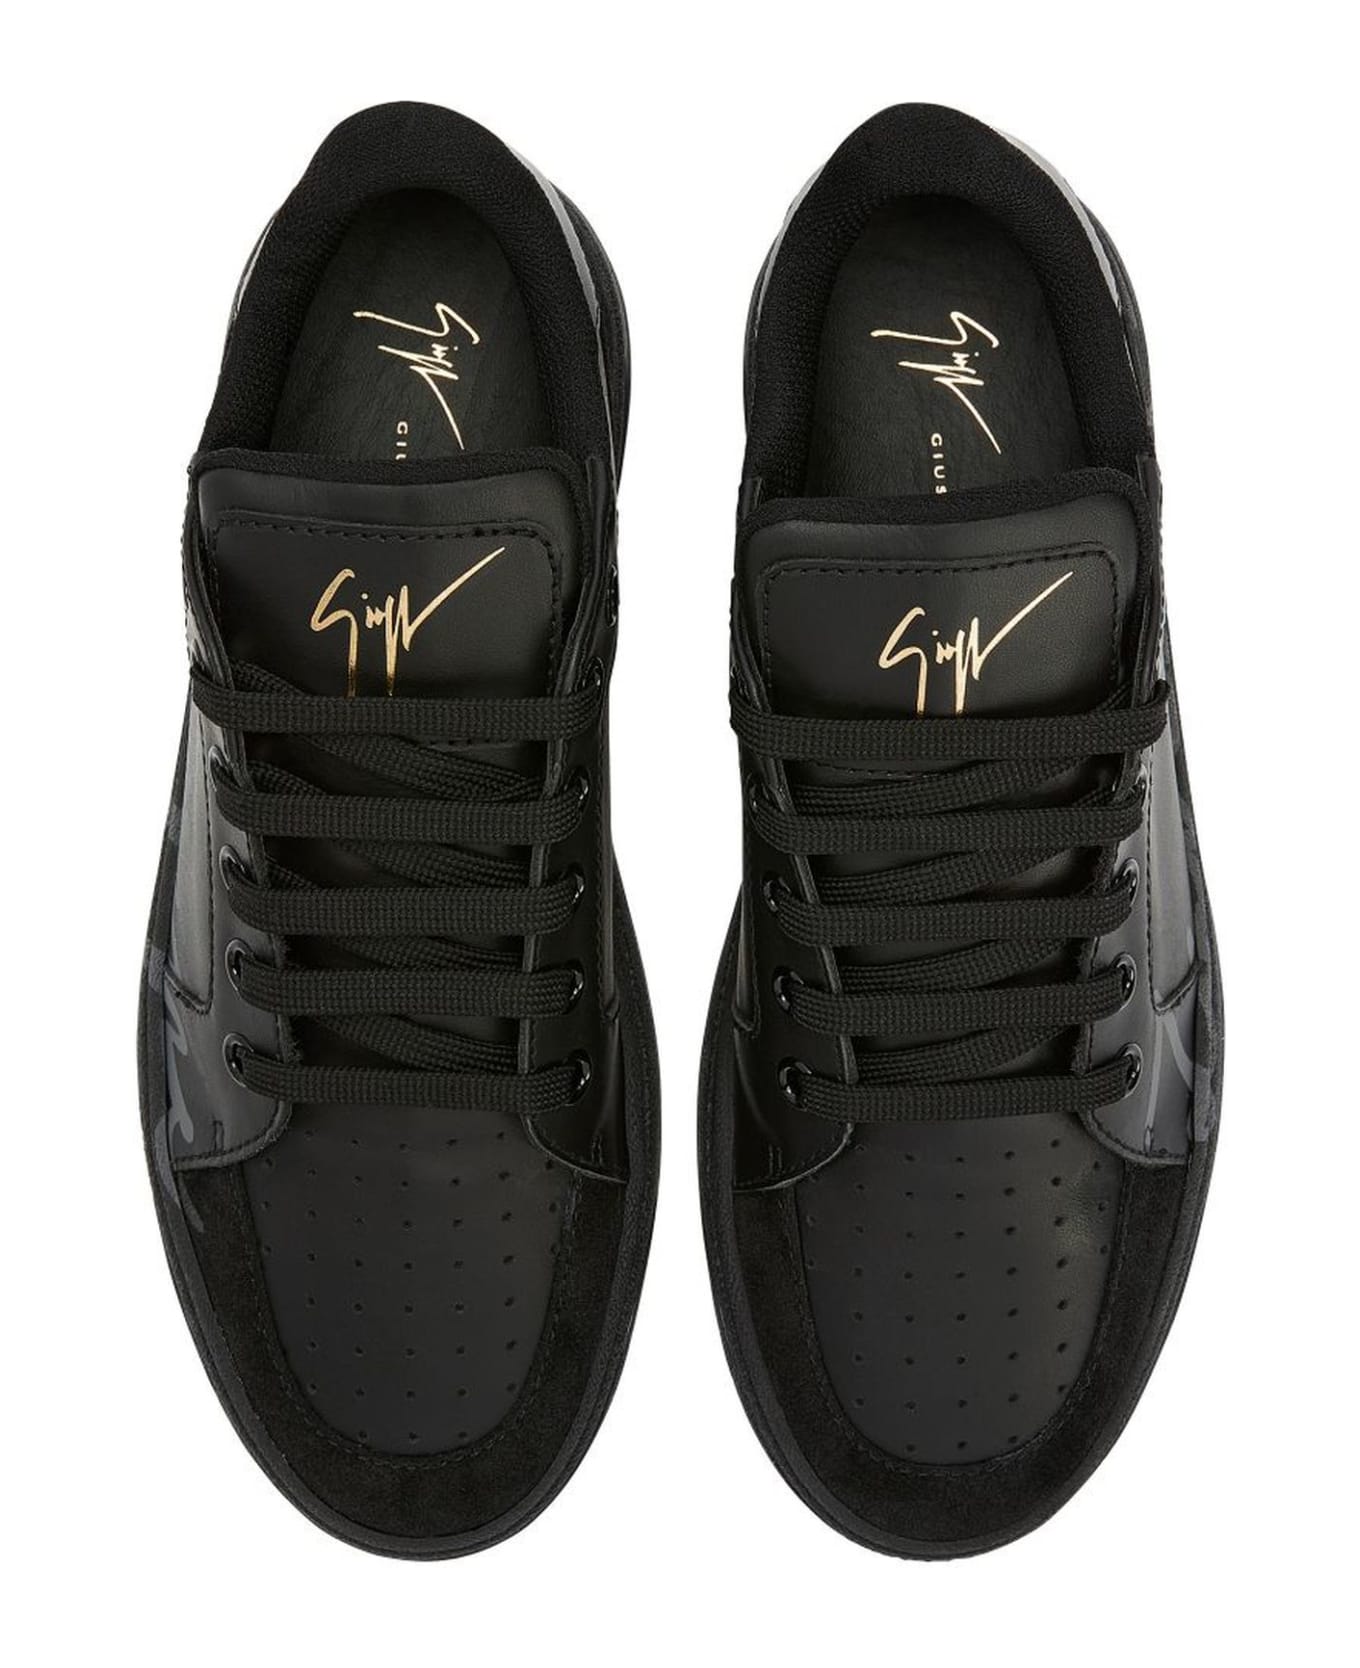 Giuseppe Zanotti Black Leather Low-top Gz94 Sneakers - Black スニーカー